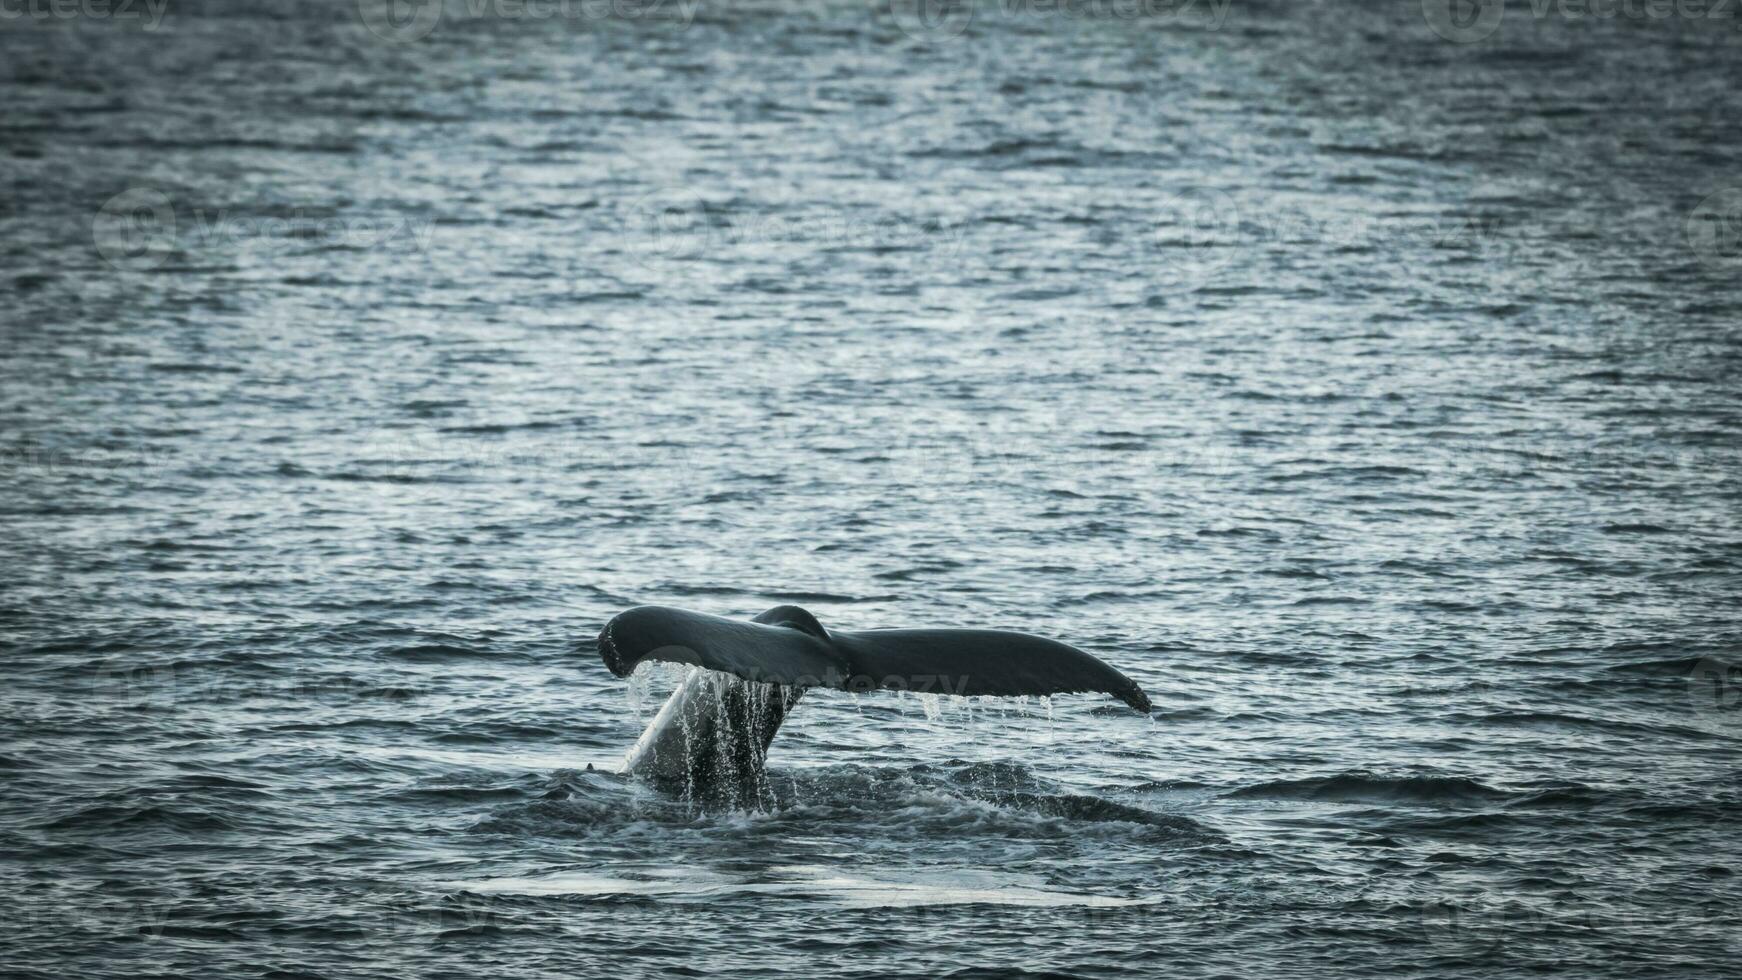 gobba balena immersioni, megatteri novaeangliae,antrtica. foto